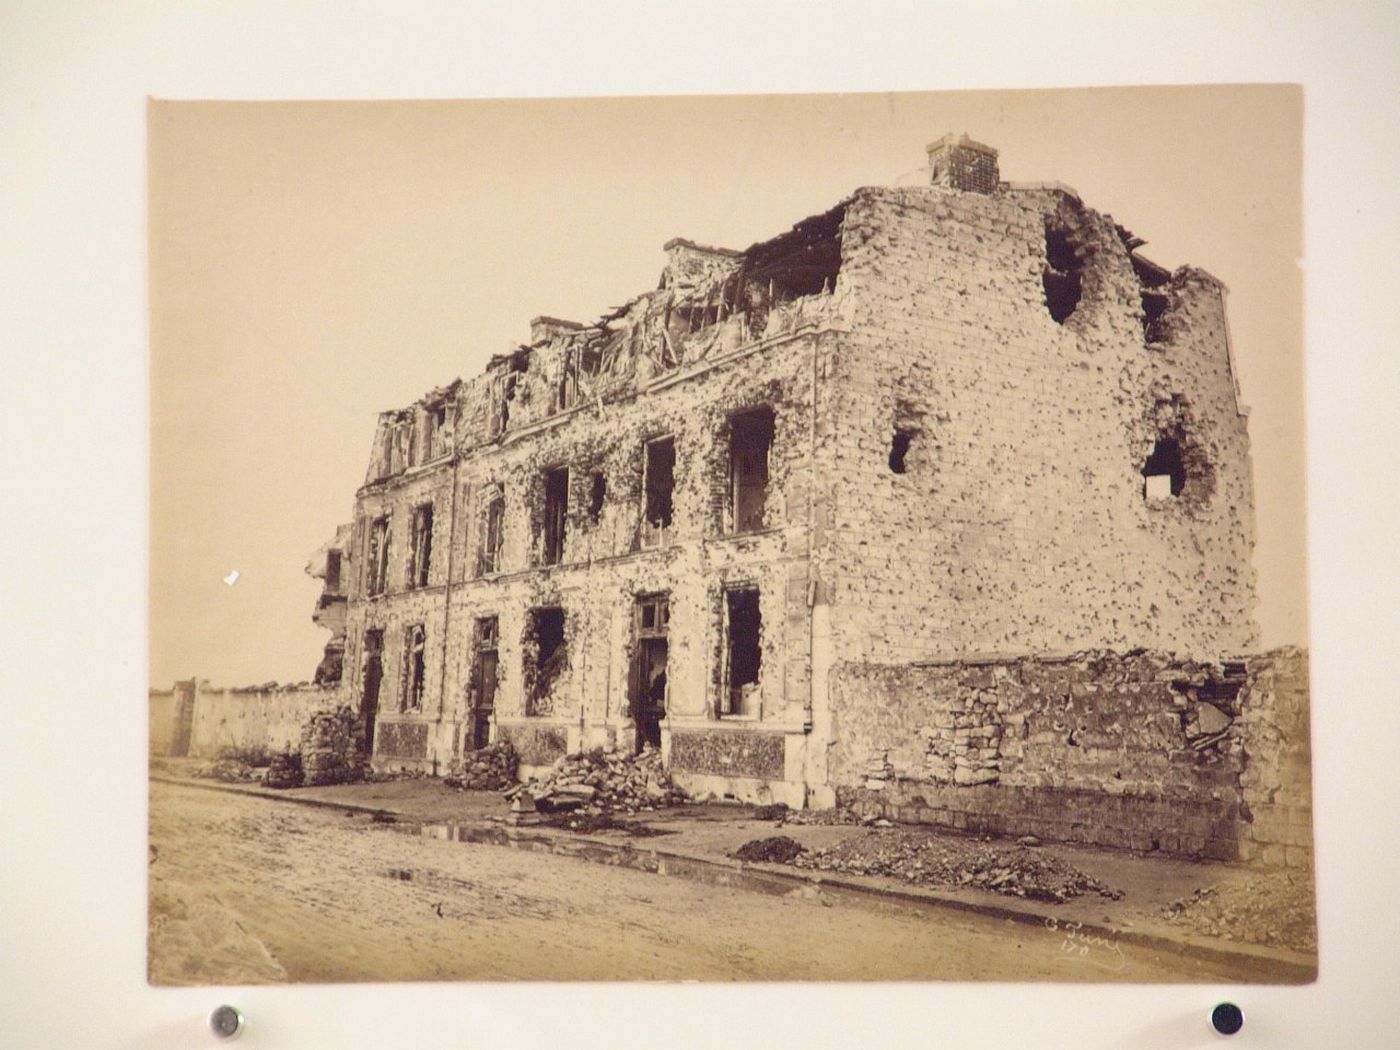 View of a building after the Paris Commune uprising of 1871, Paris, France